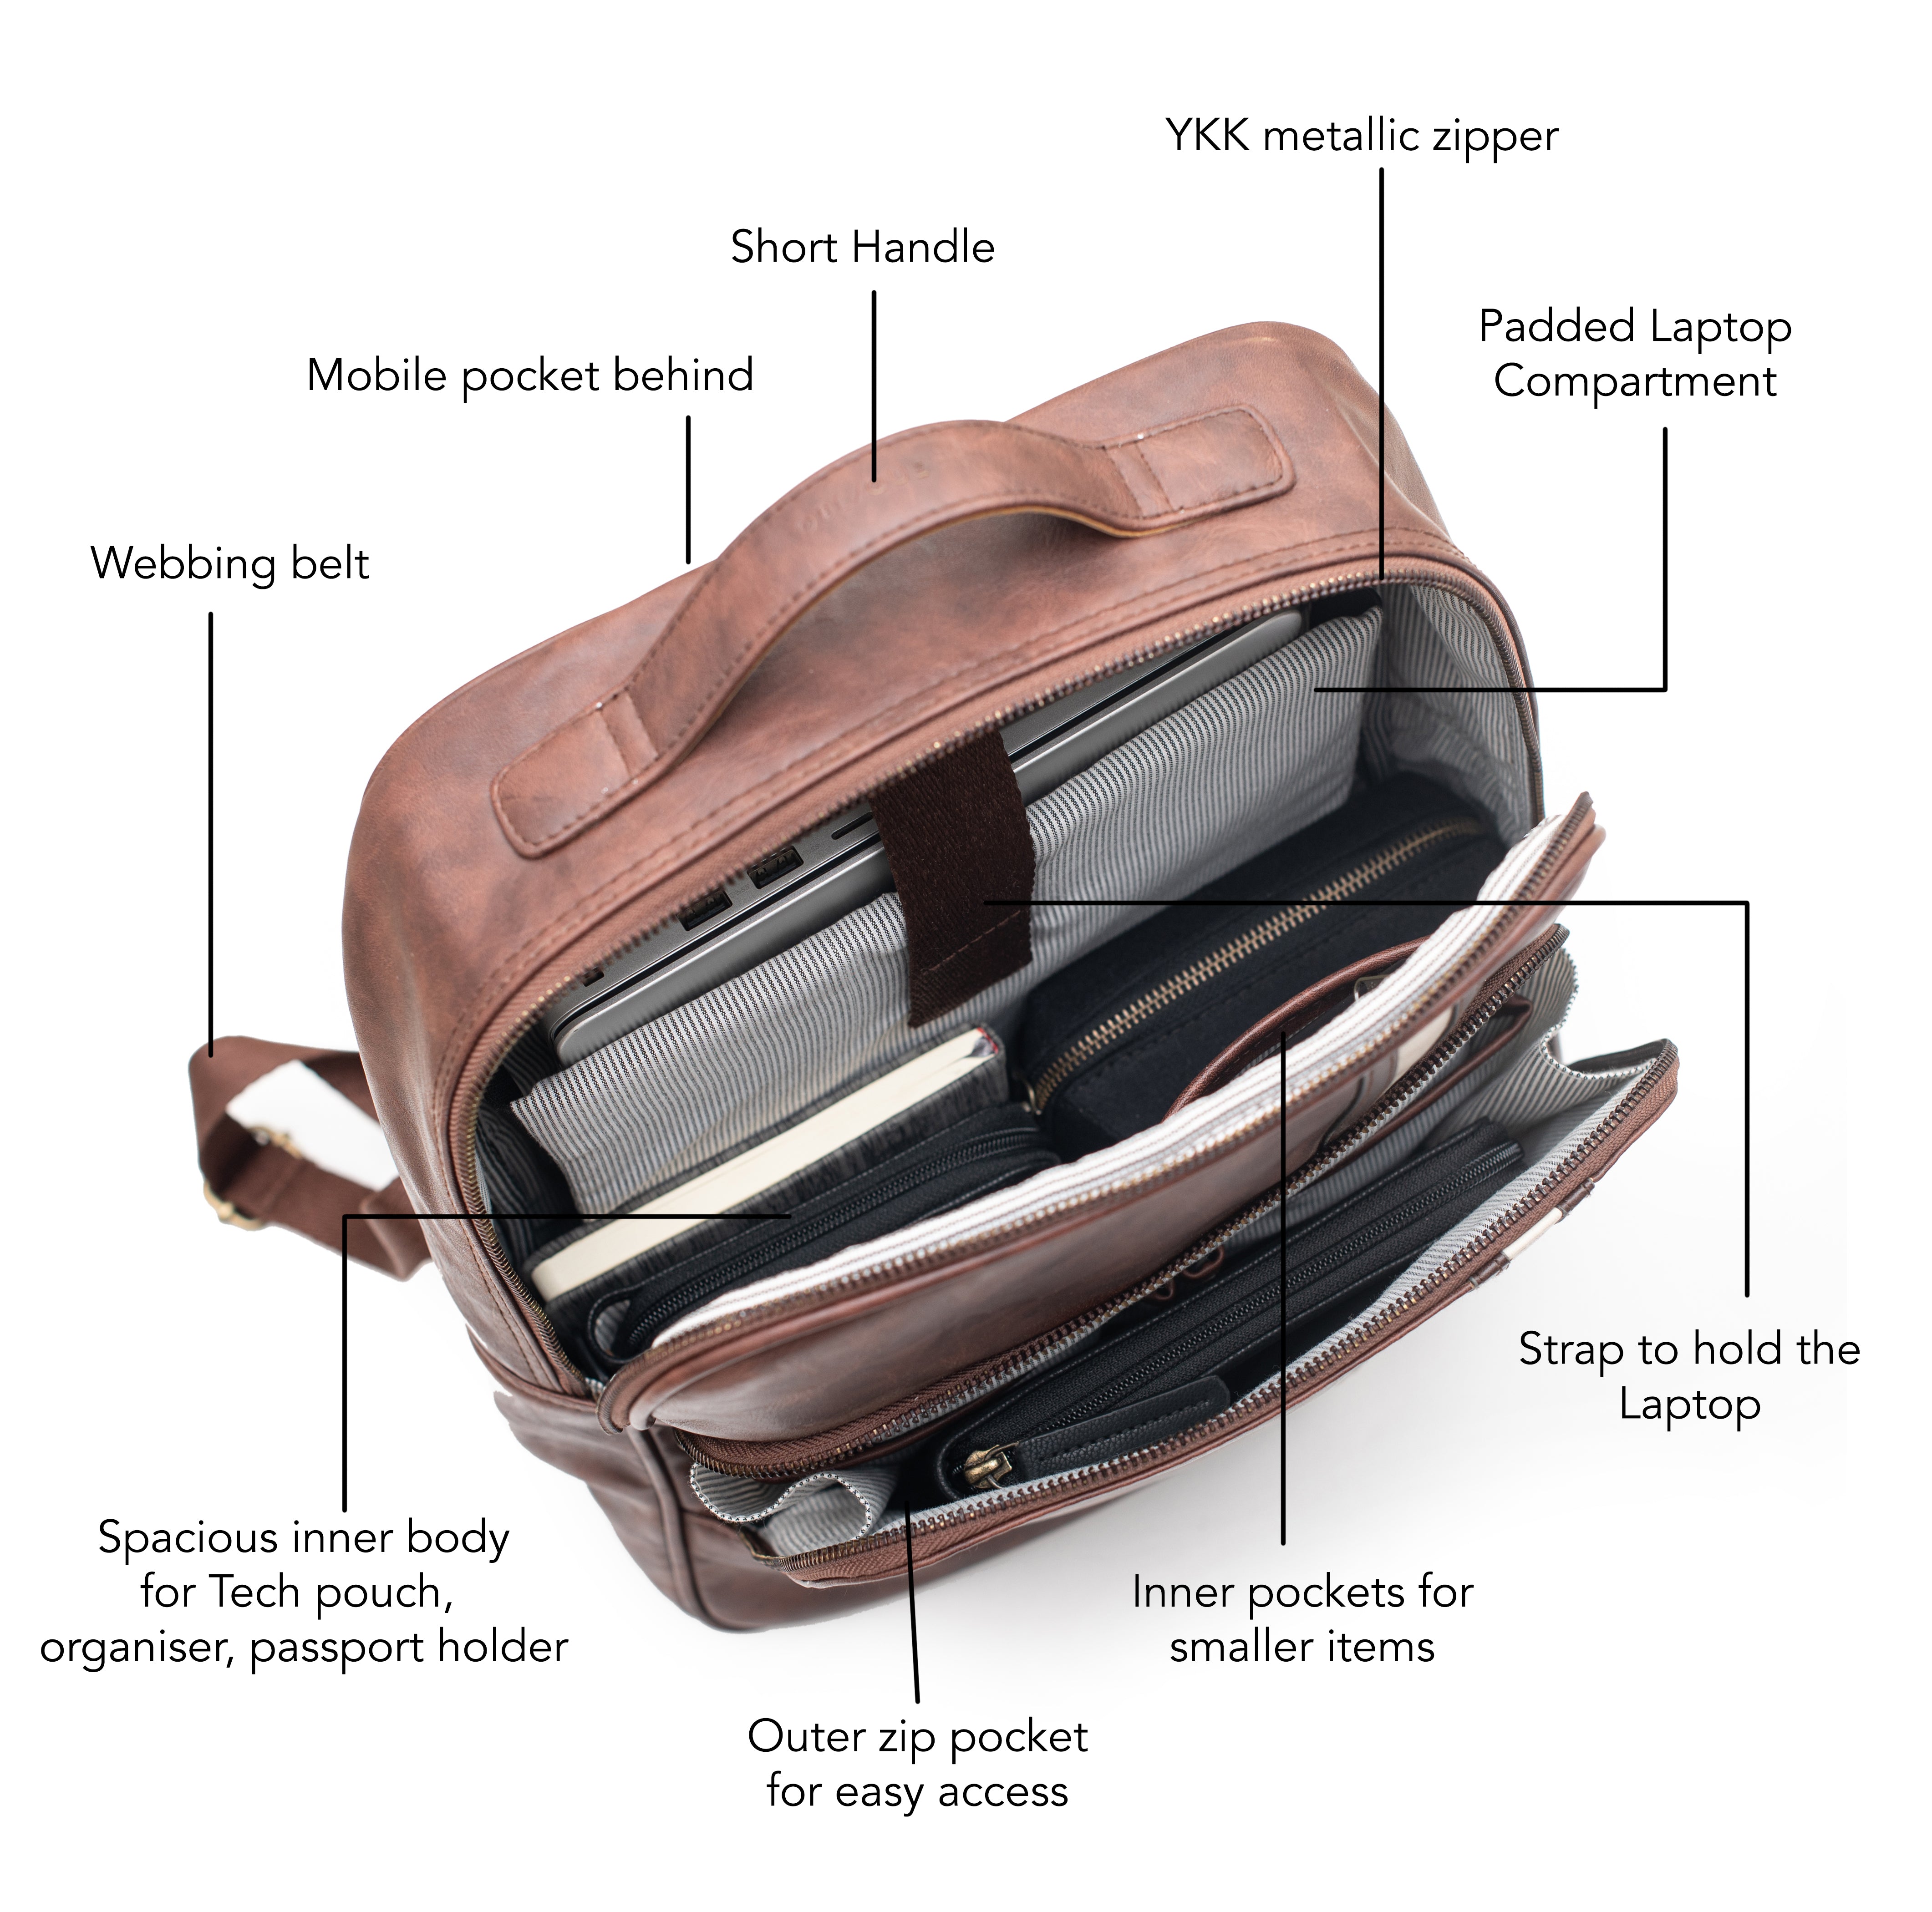 Laptop Backpack For Men & Women- Phoenix